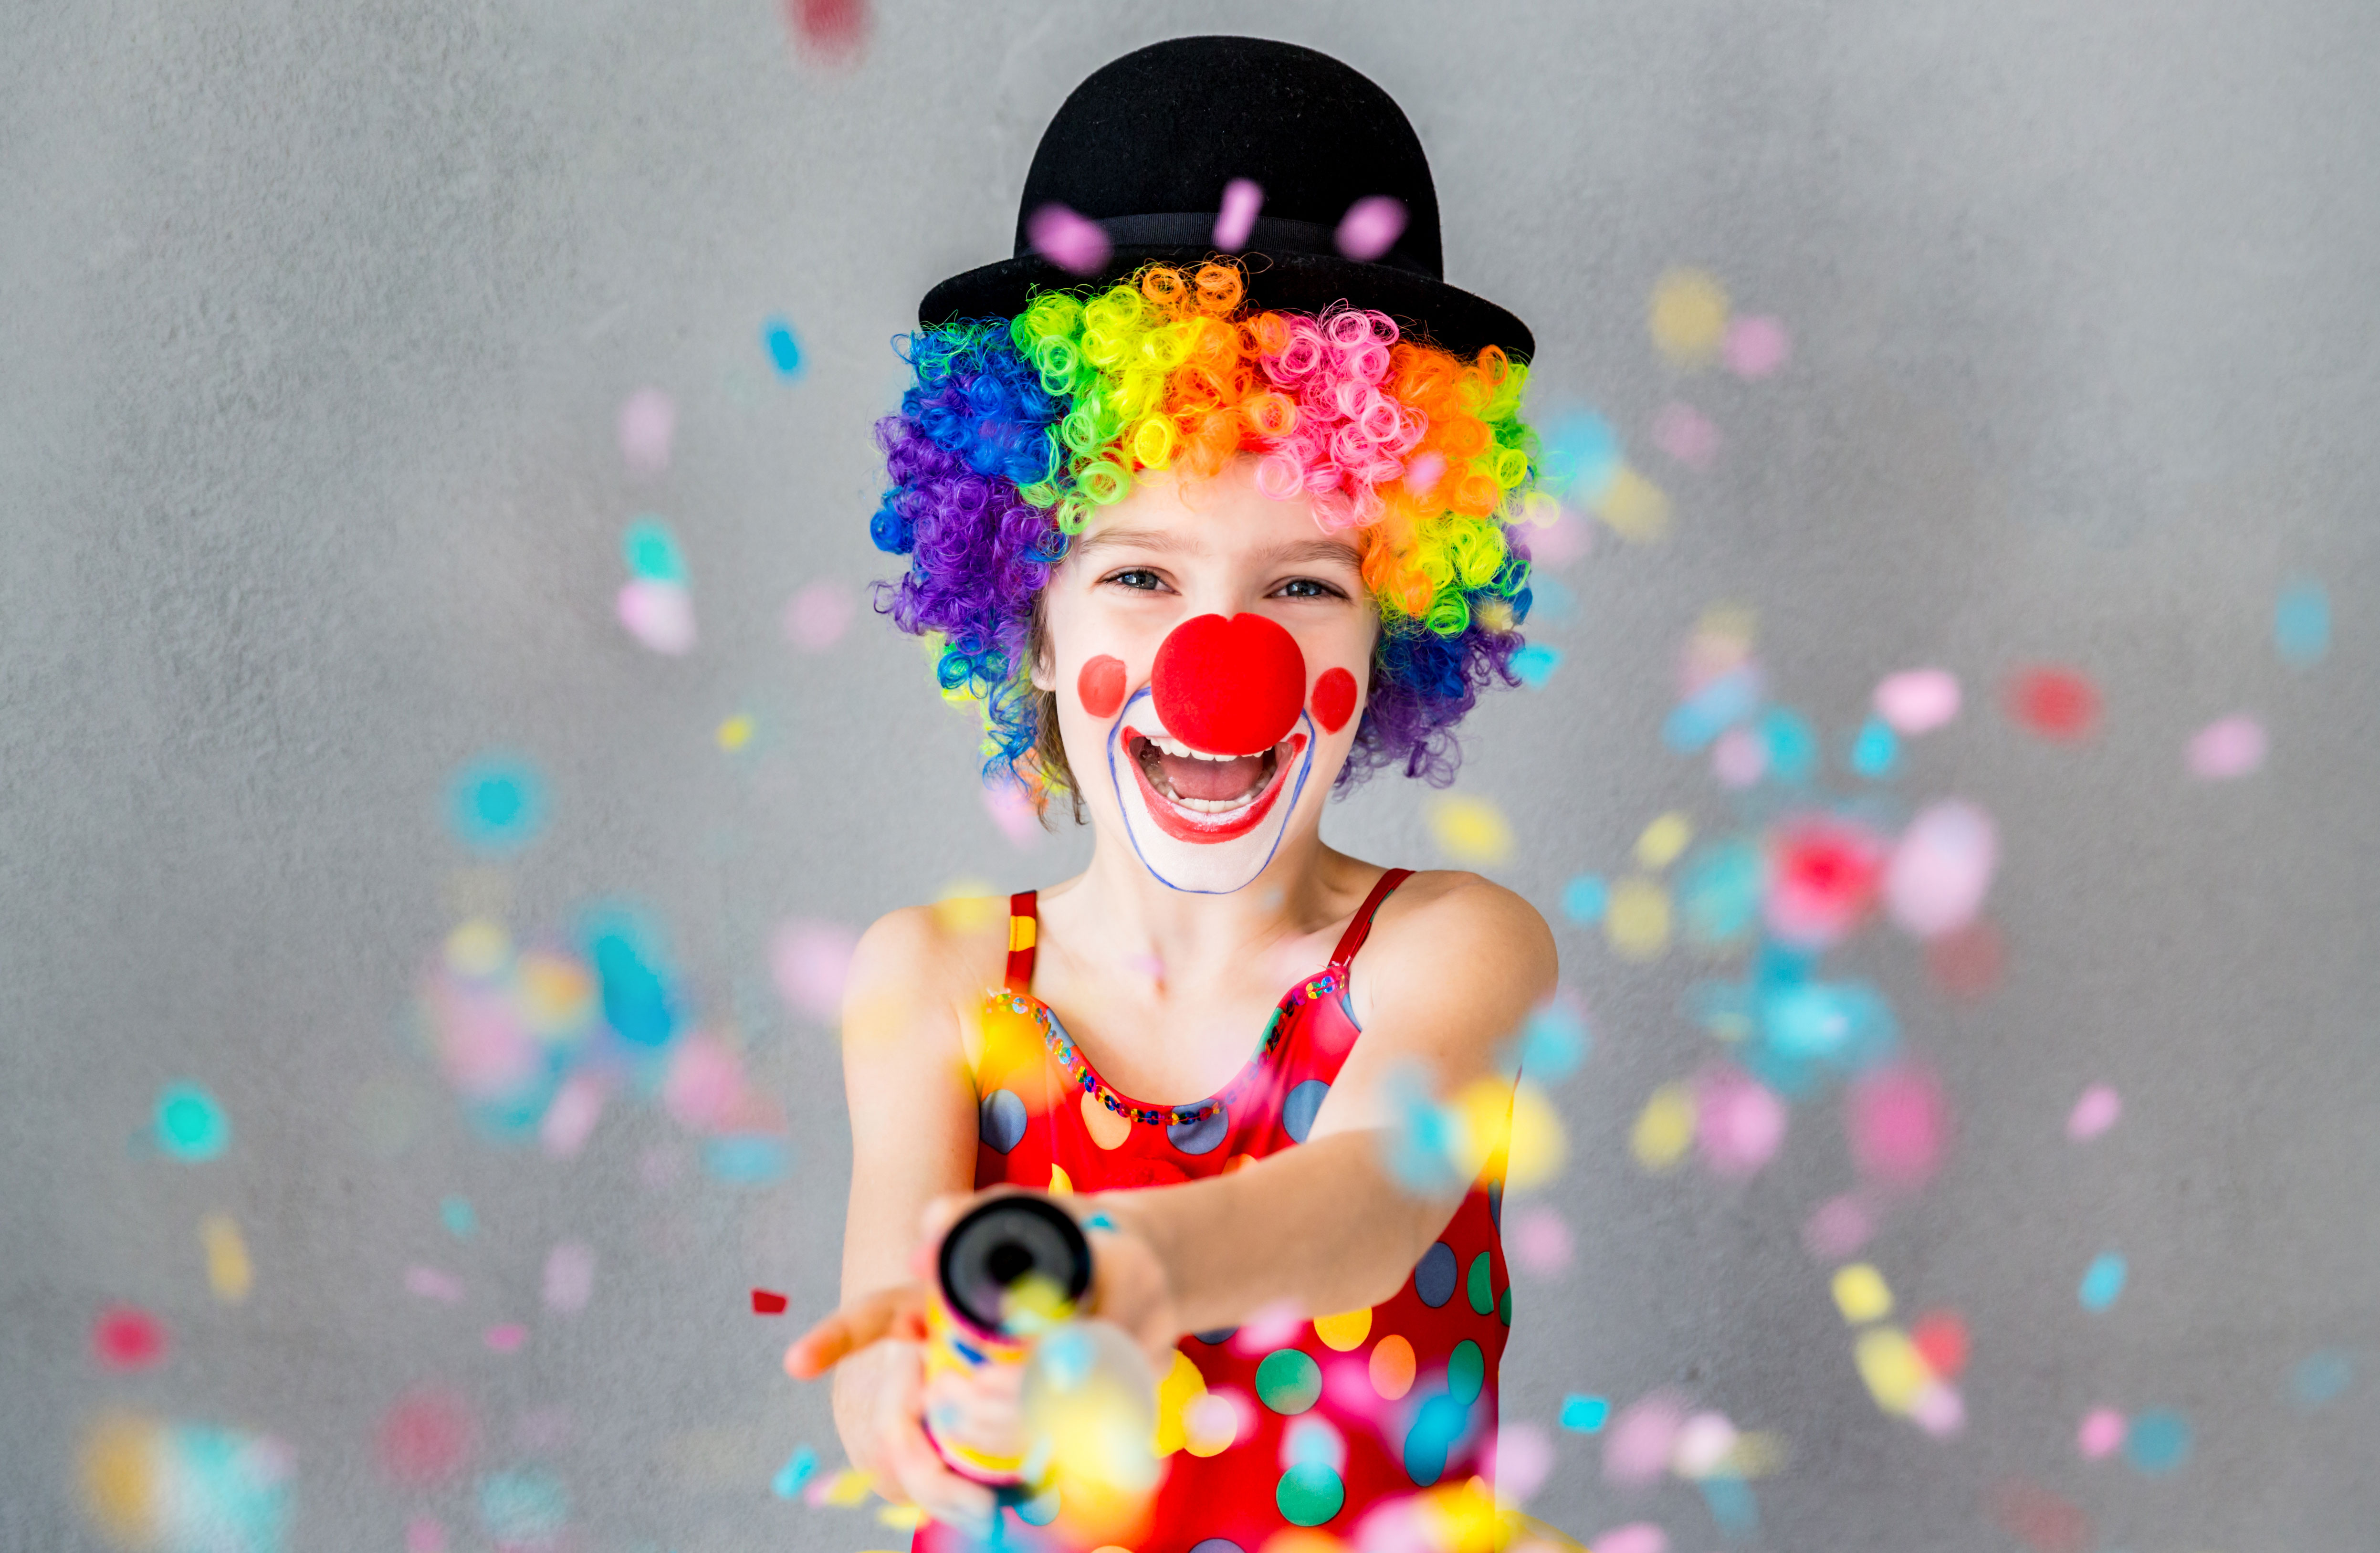 Веселый праздник 1 апреля. День смеха. Девочка клоун. 1 Апреля день смеха. Фотосессия клоун.